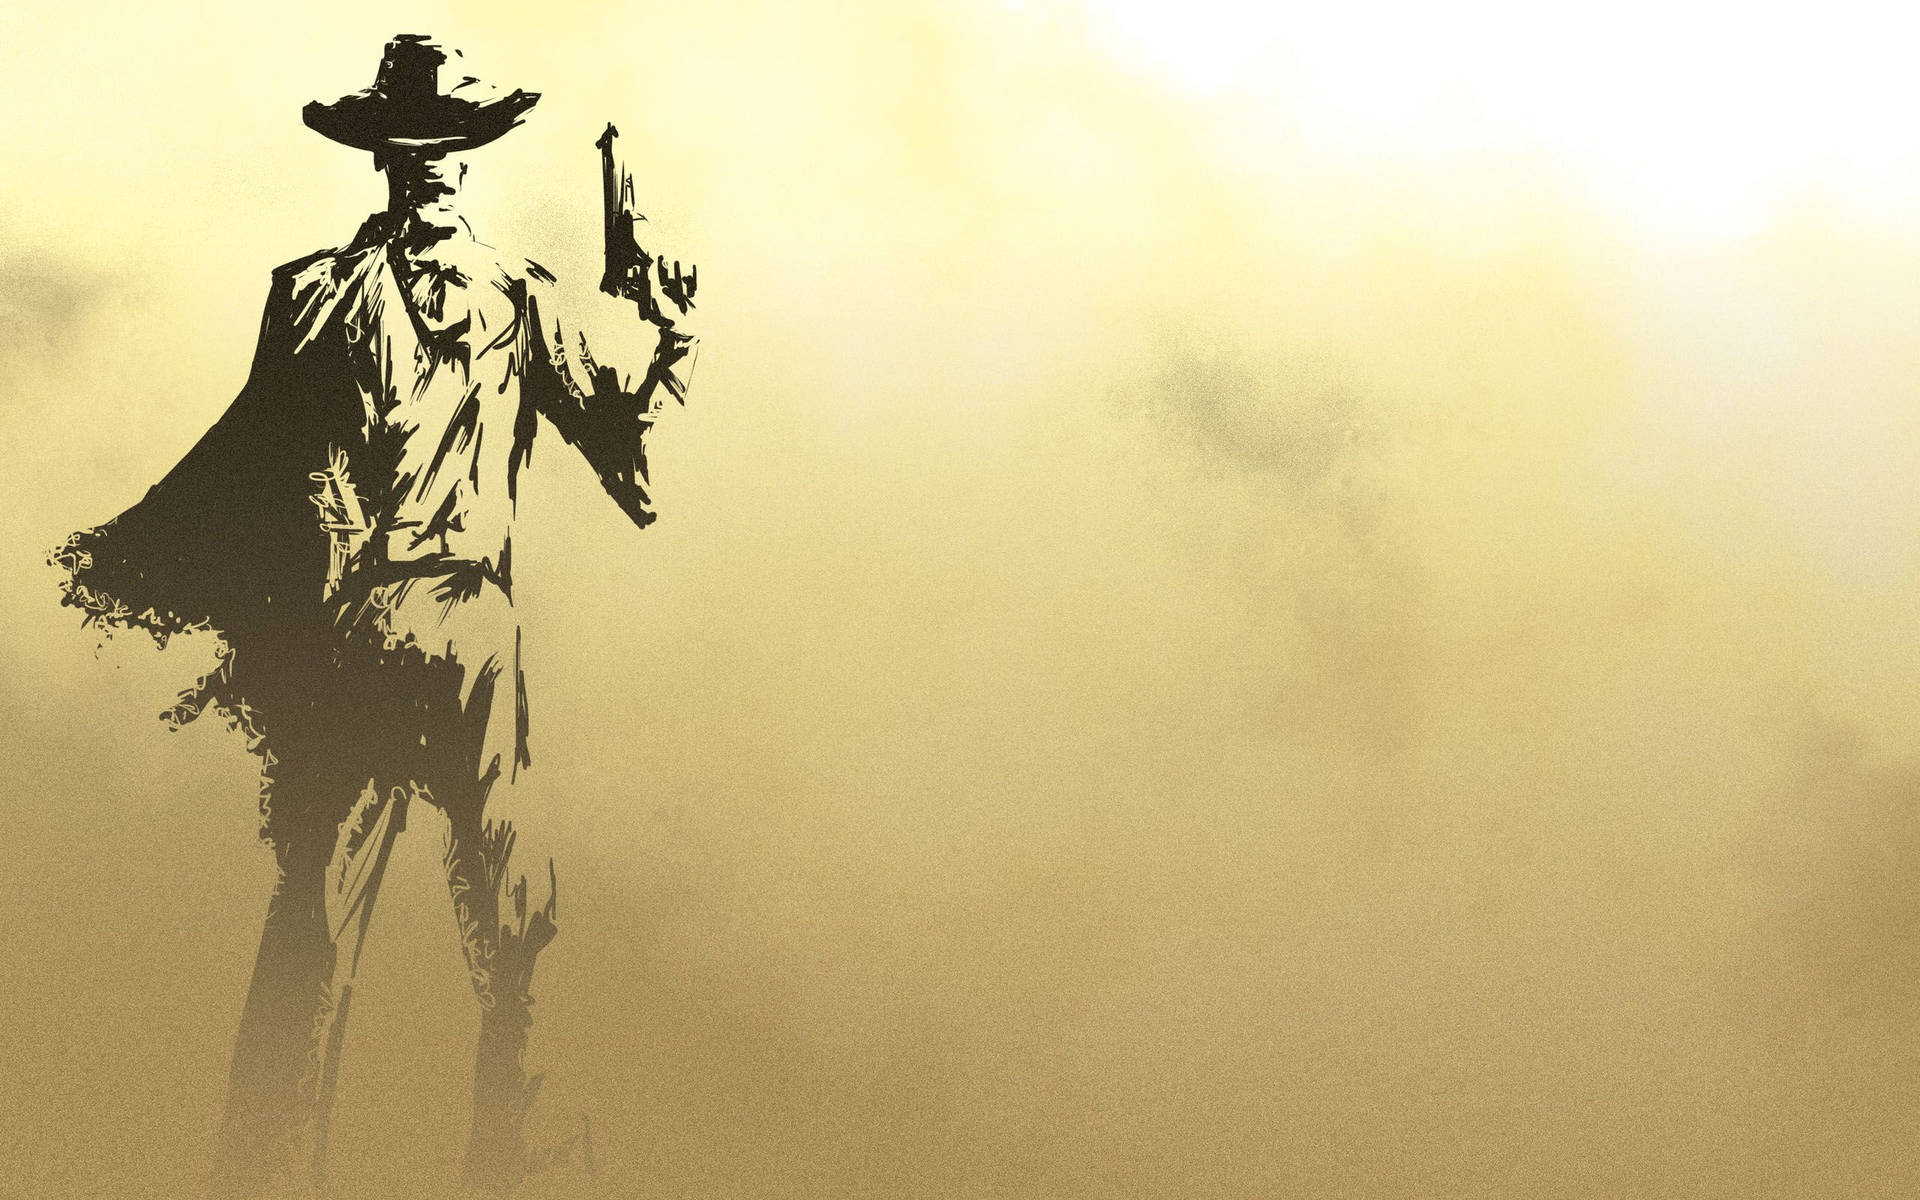 Western Cowboy With Drawn Pistol Background